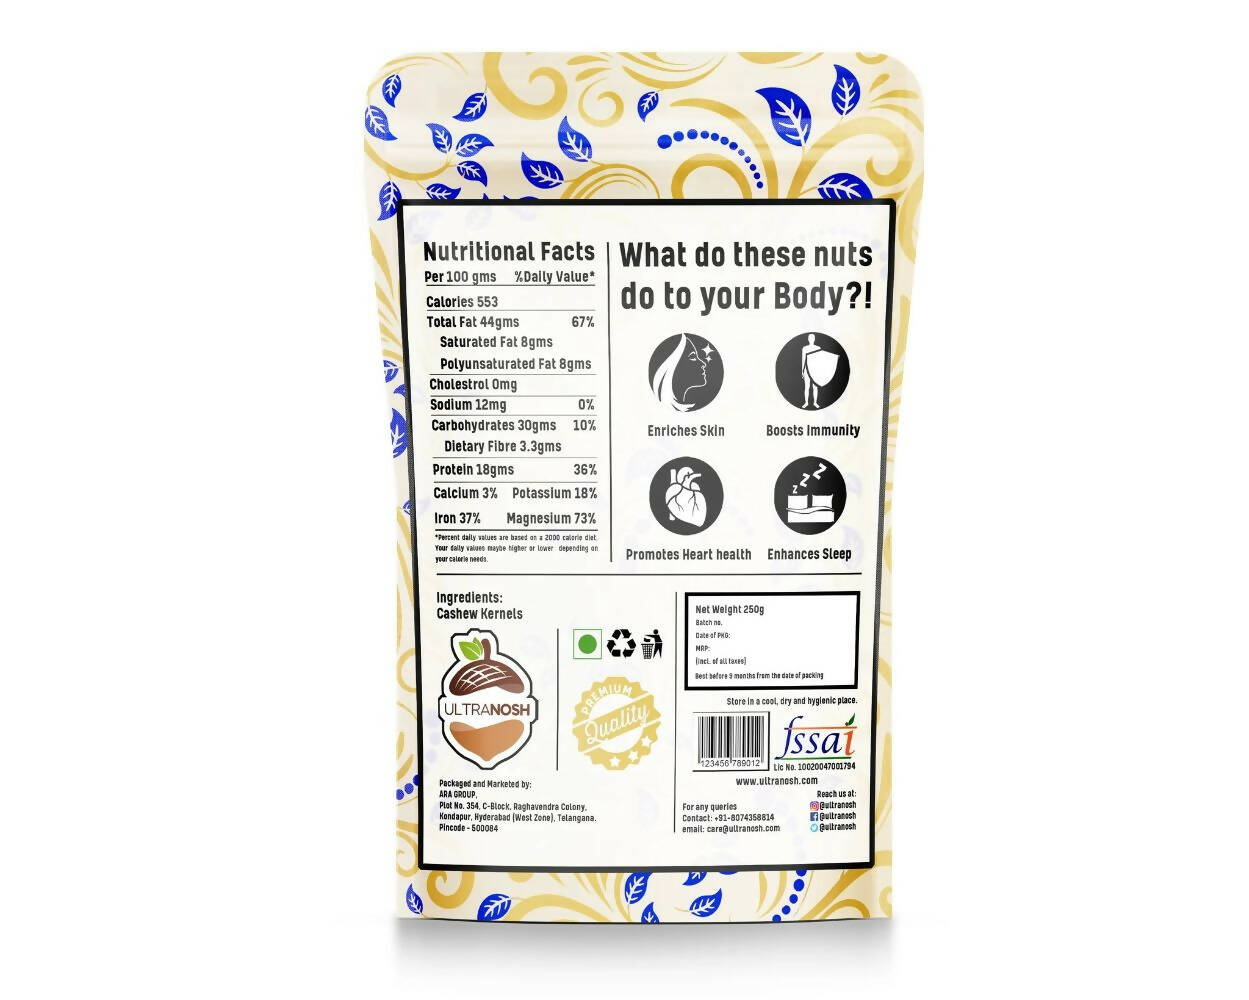 Ultranosh Premium Quality Cashews Nuts - Distacart